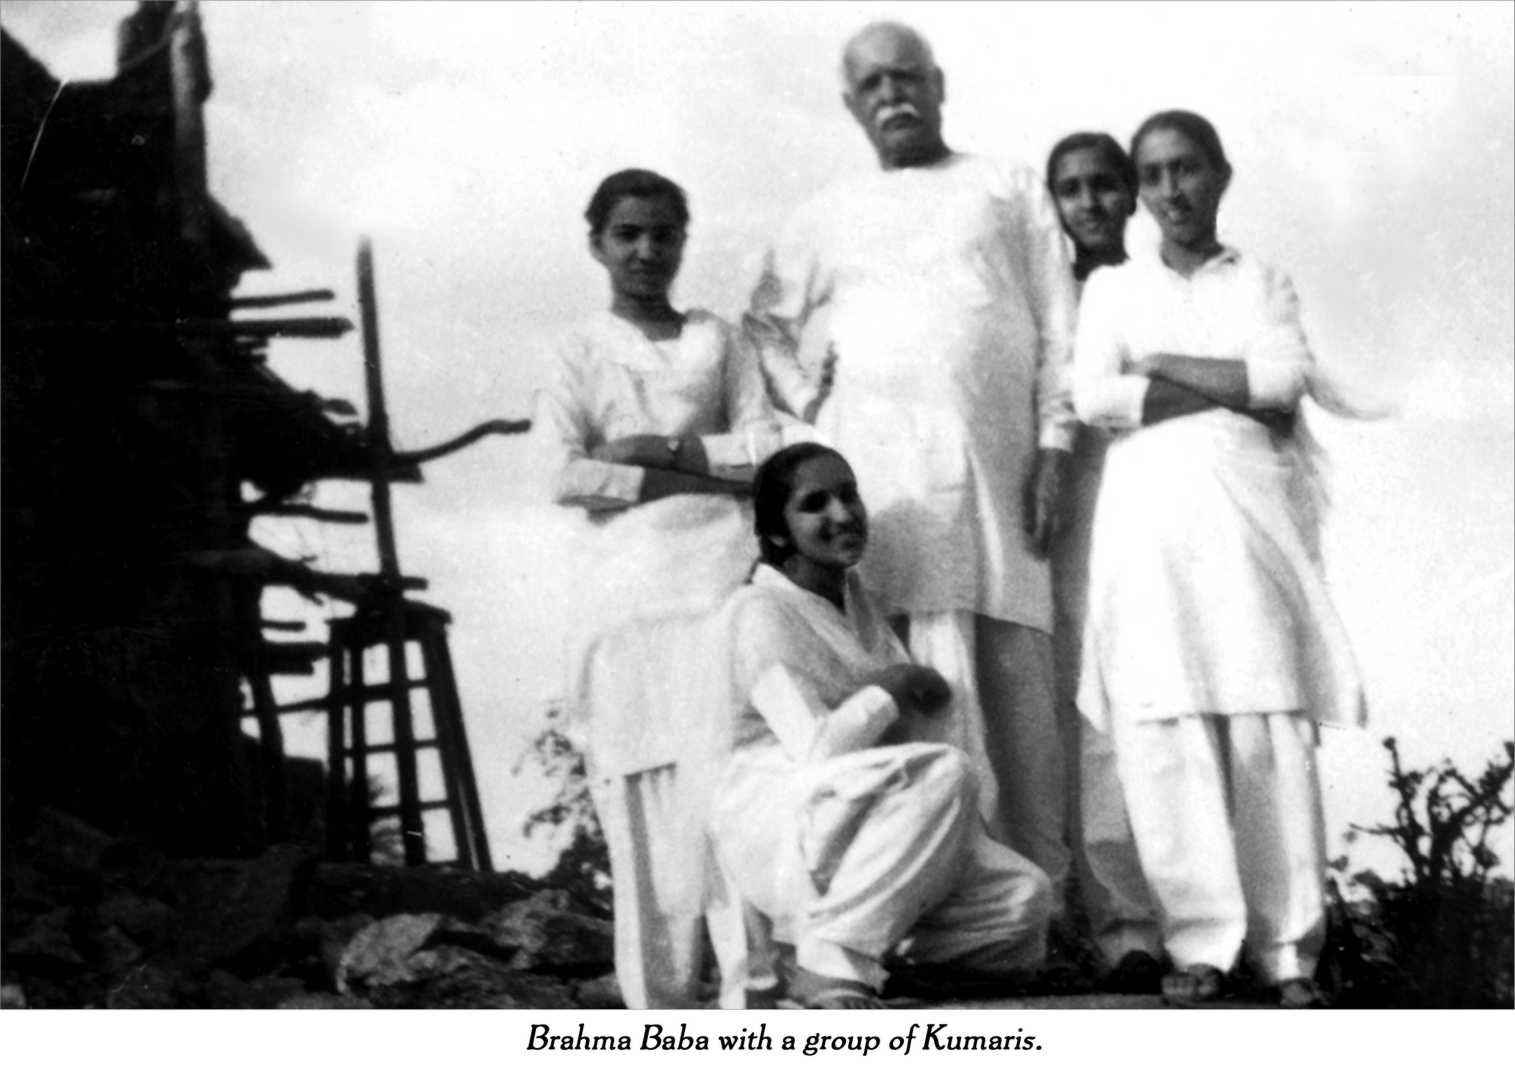 Brahma baba with a group of kumaris